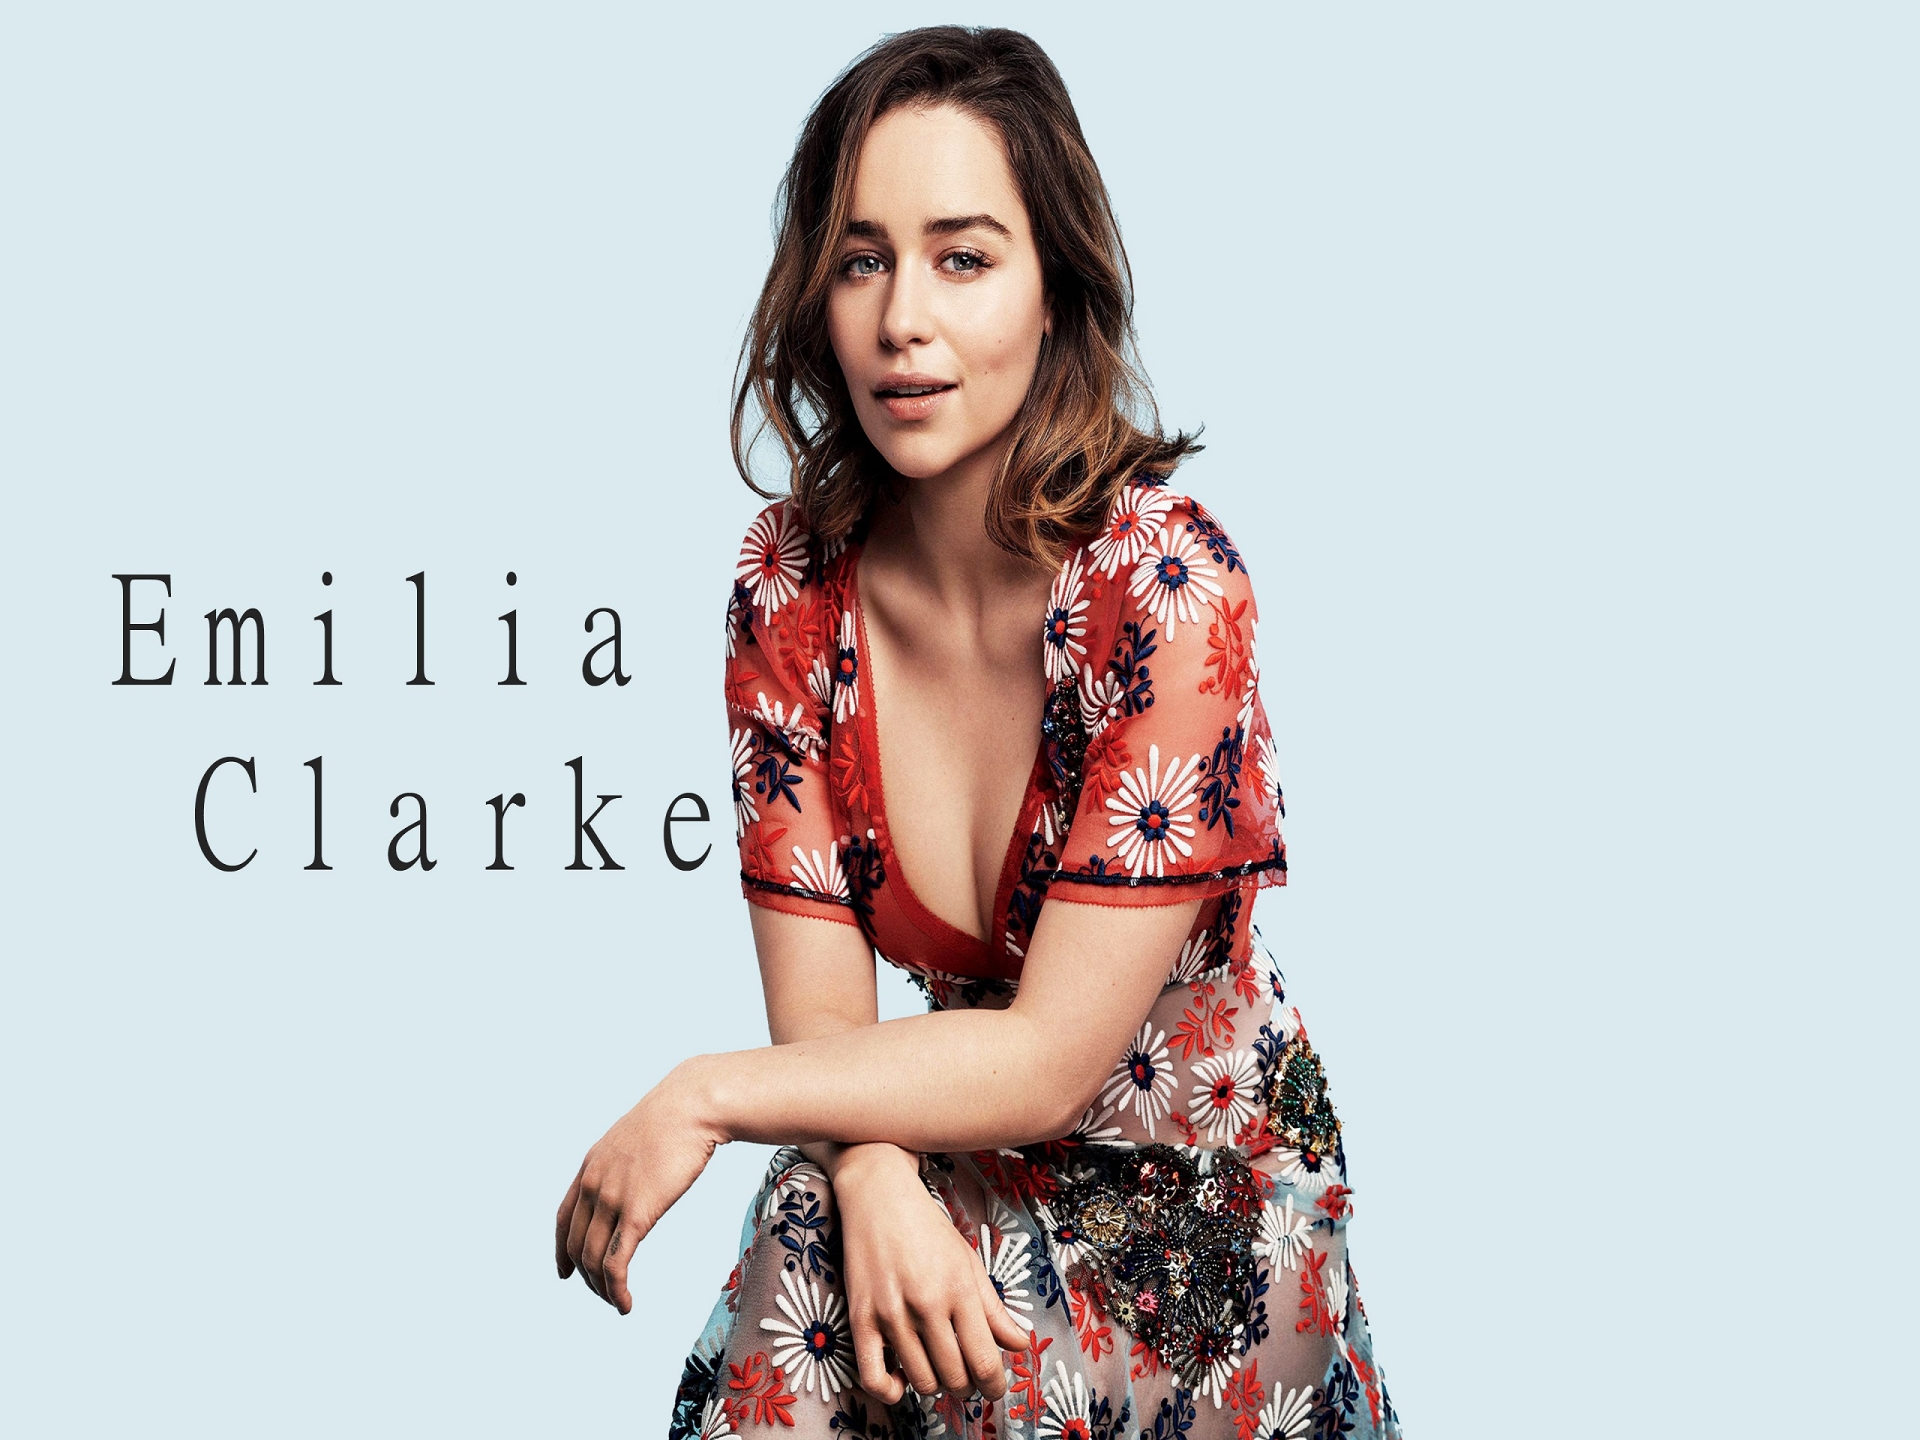 Emilia Clarke 2017 for 1920 x 1440 resolution